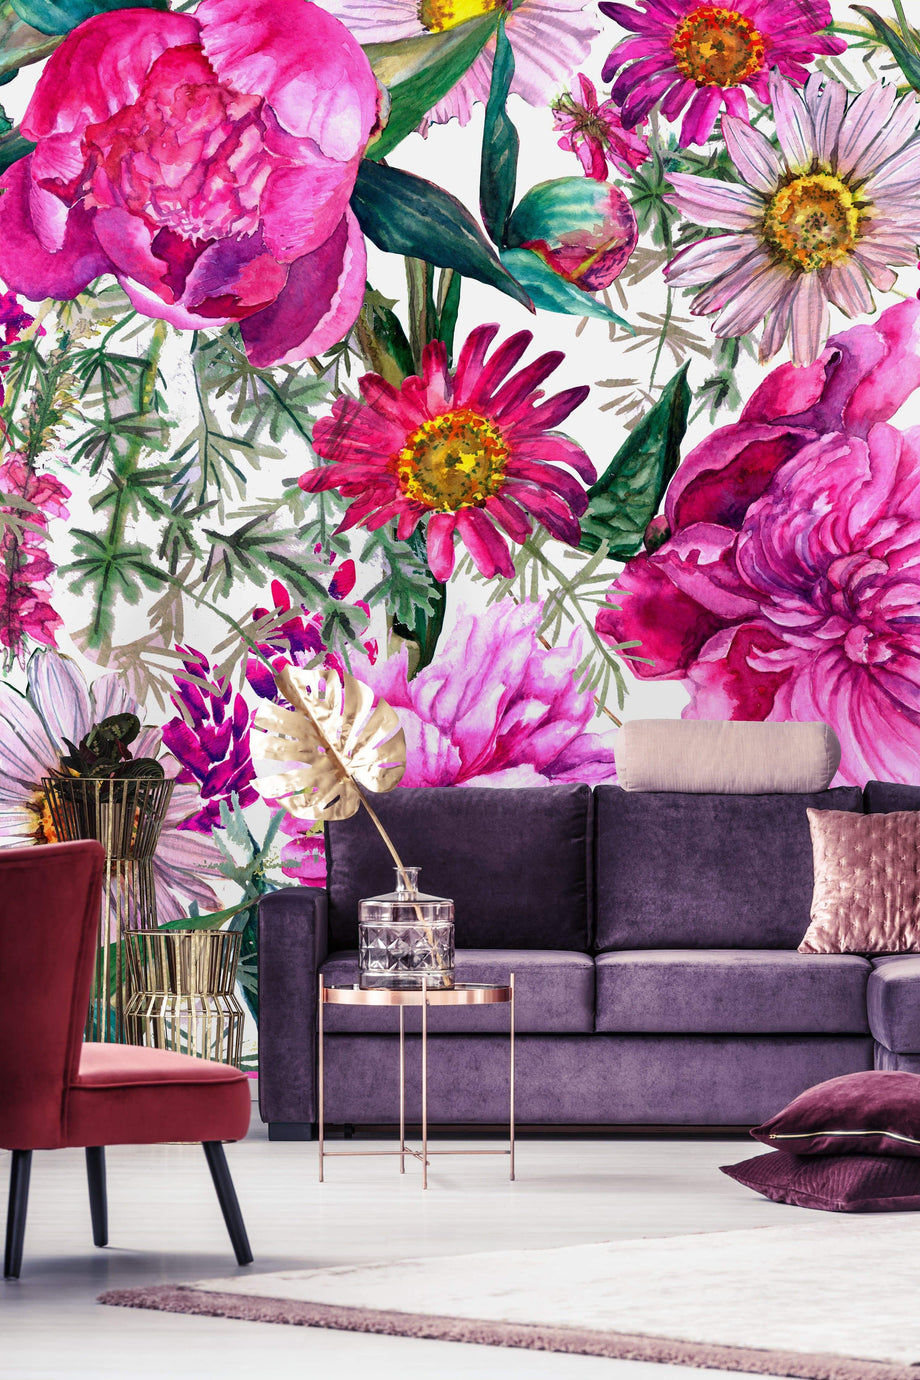 Beautiful Field Flowers Printed Mirror Acrylic Circles Wall by uniQstiQ